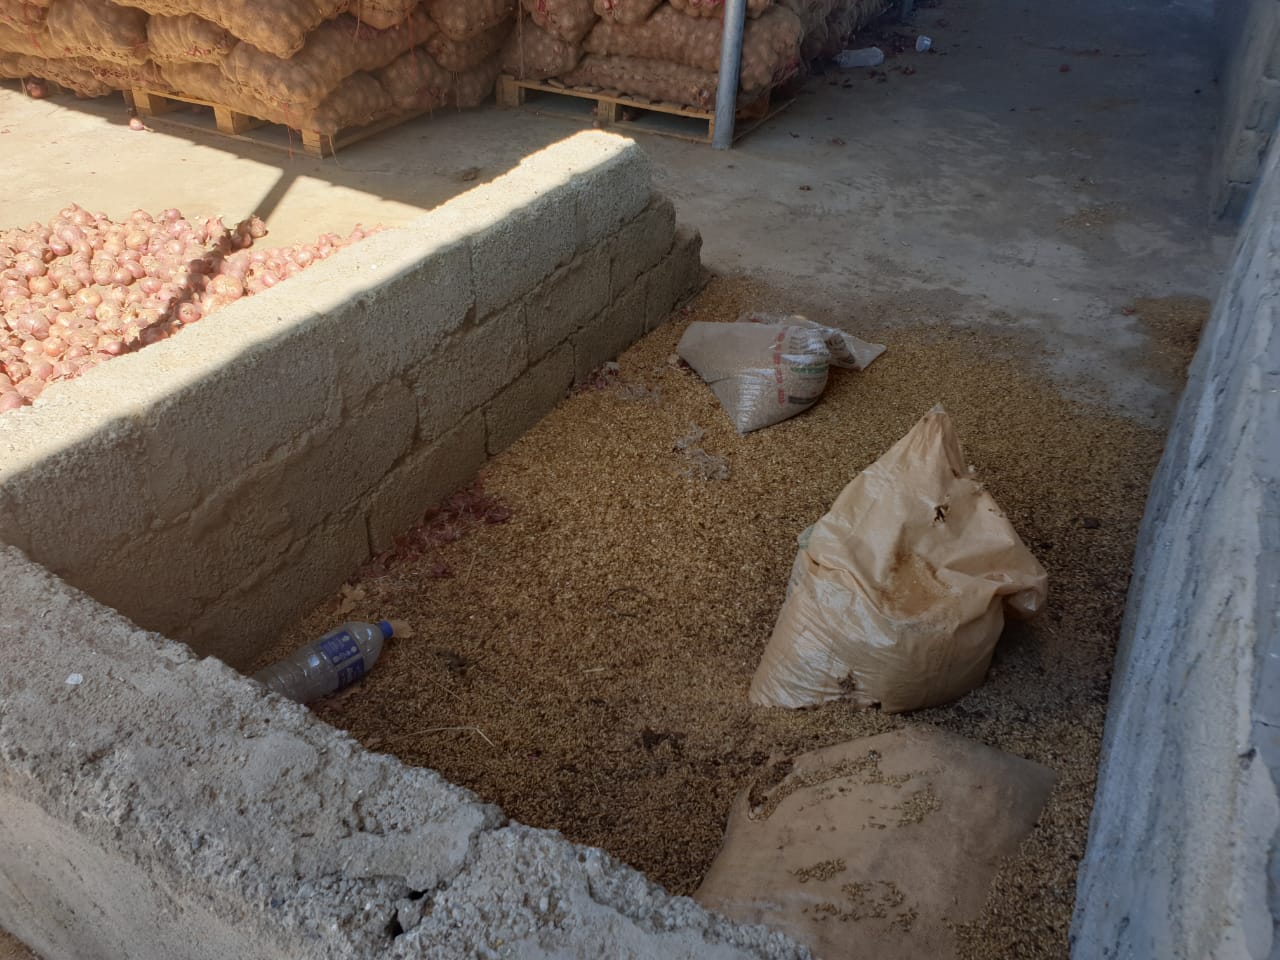 Sohar Municipality raids farm, authorities take legal action